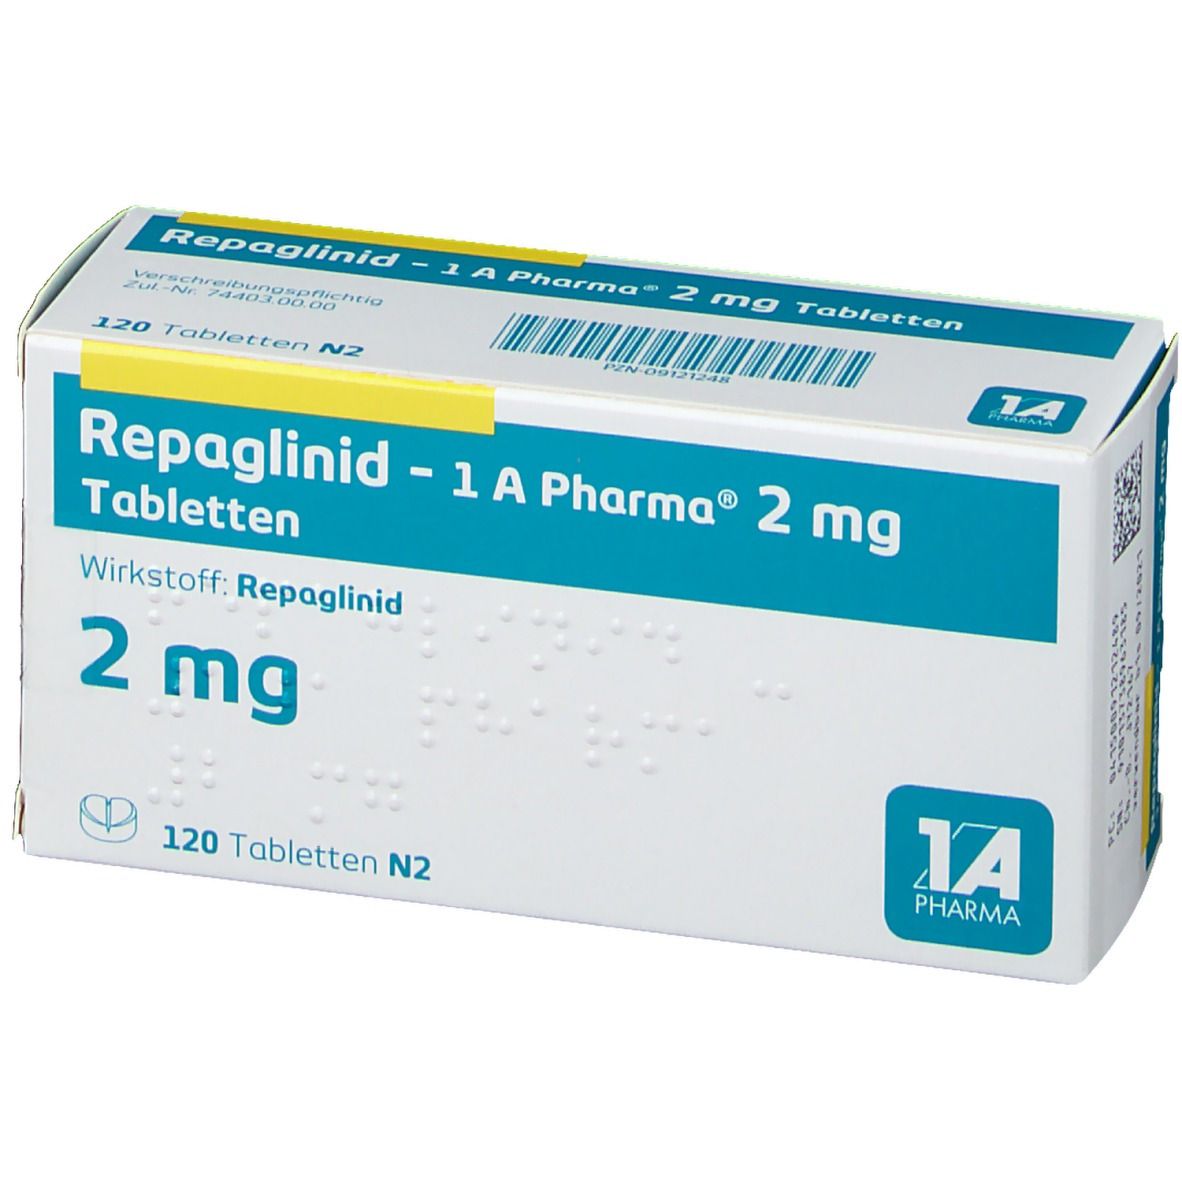 Repaglinid 1A Pharma® 2Mg